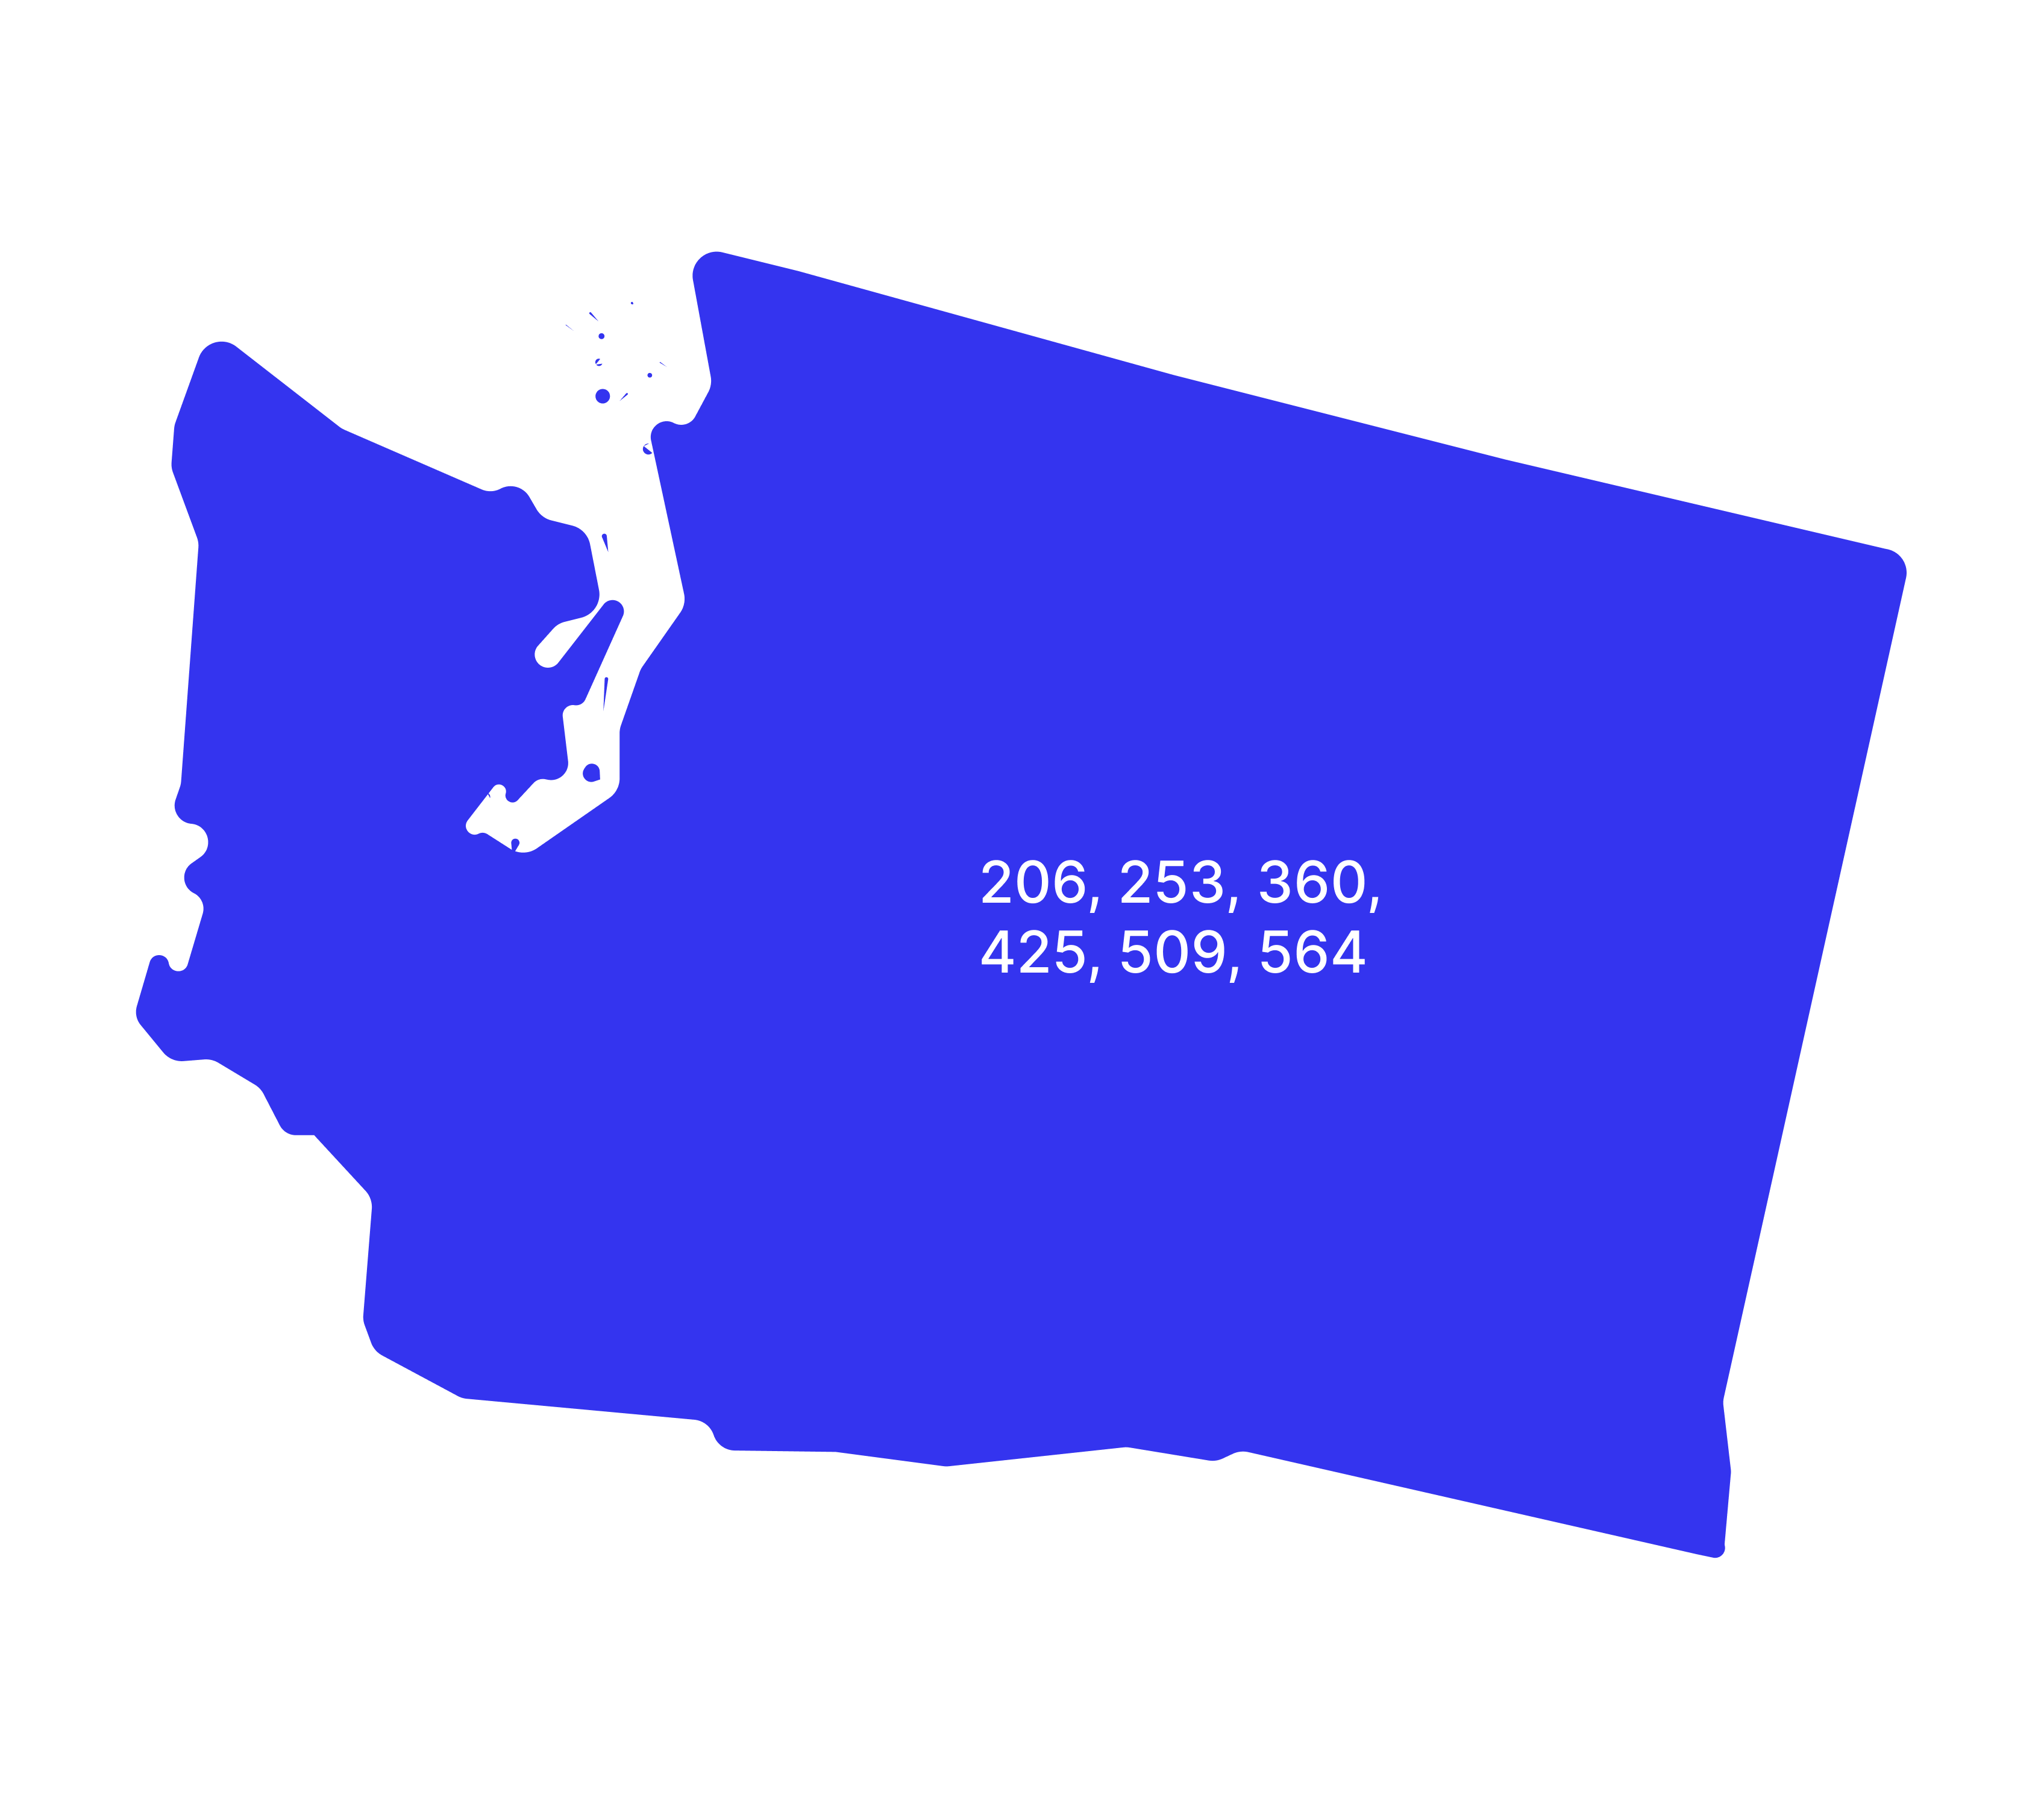 Washington phone numbers